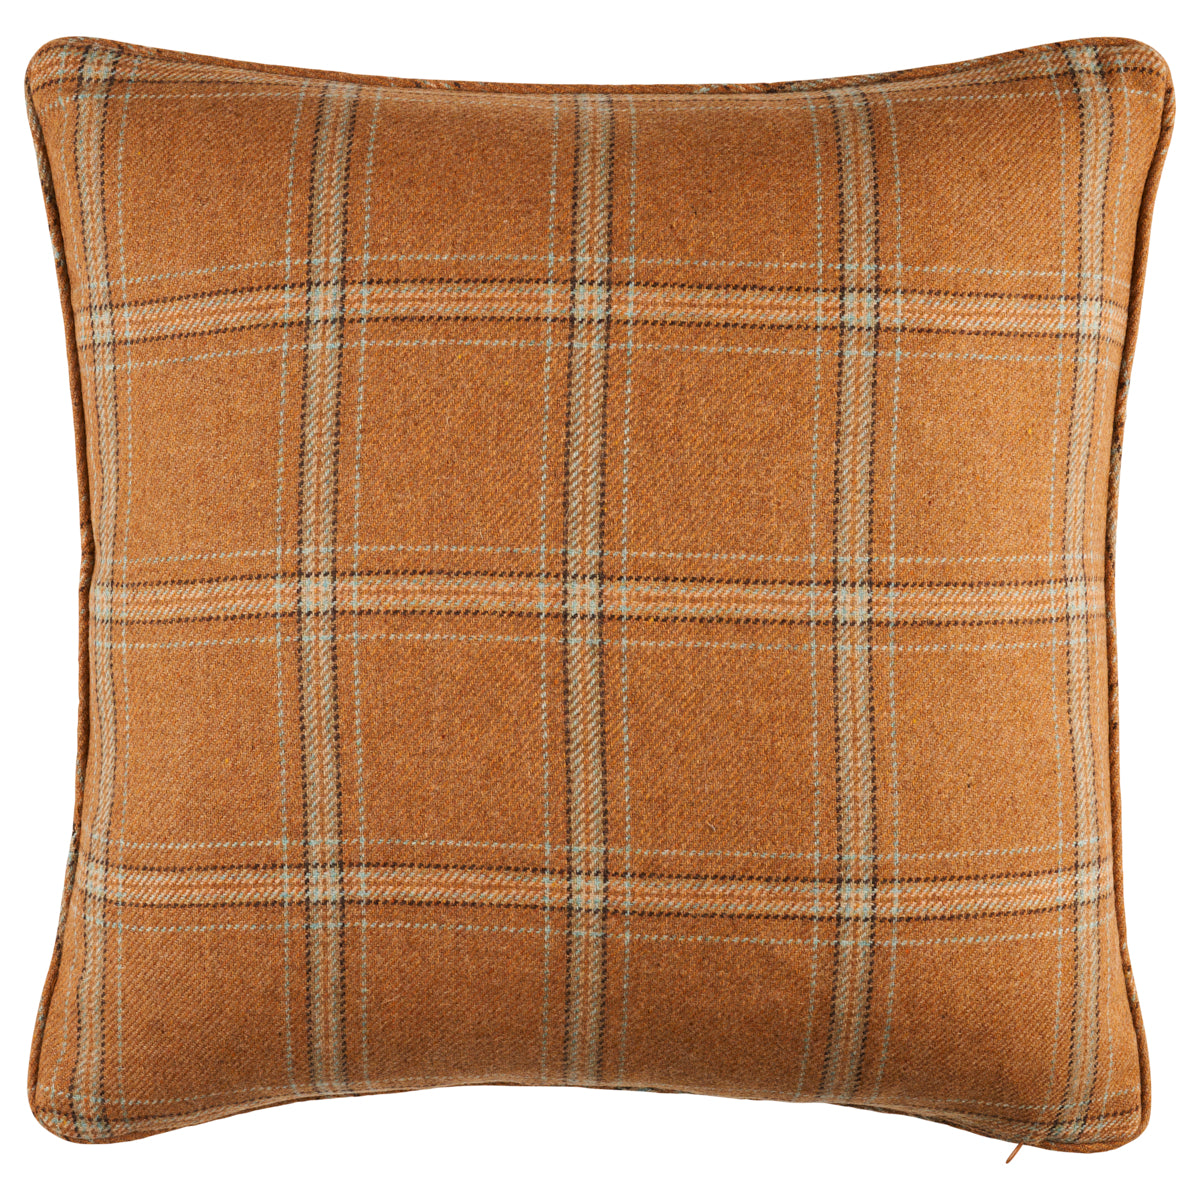 Blackburn Merino Plaid Pillow - Camel (Pre Order)